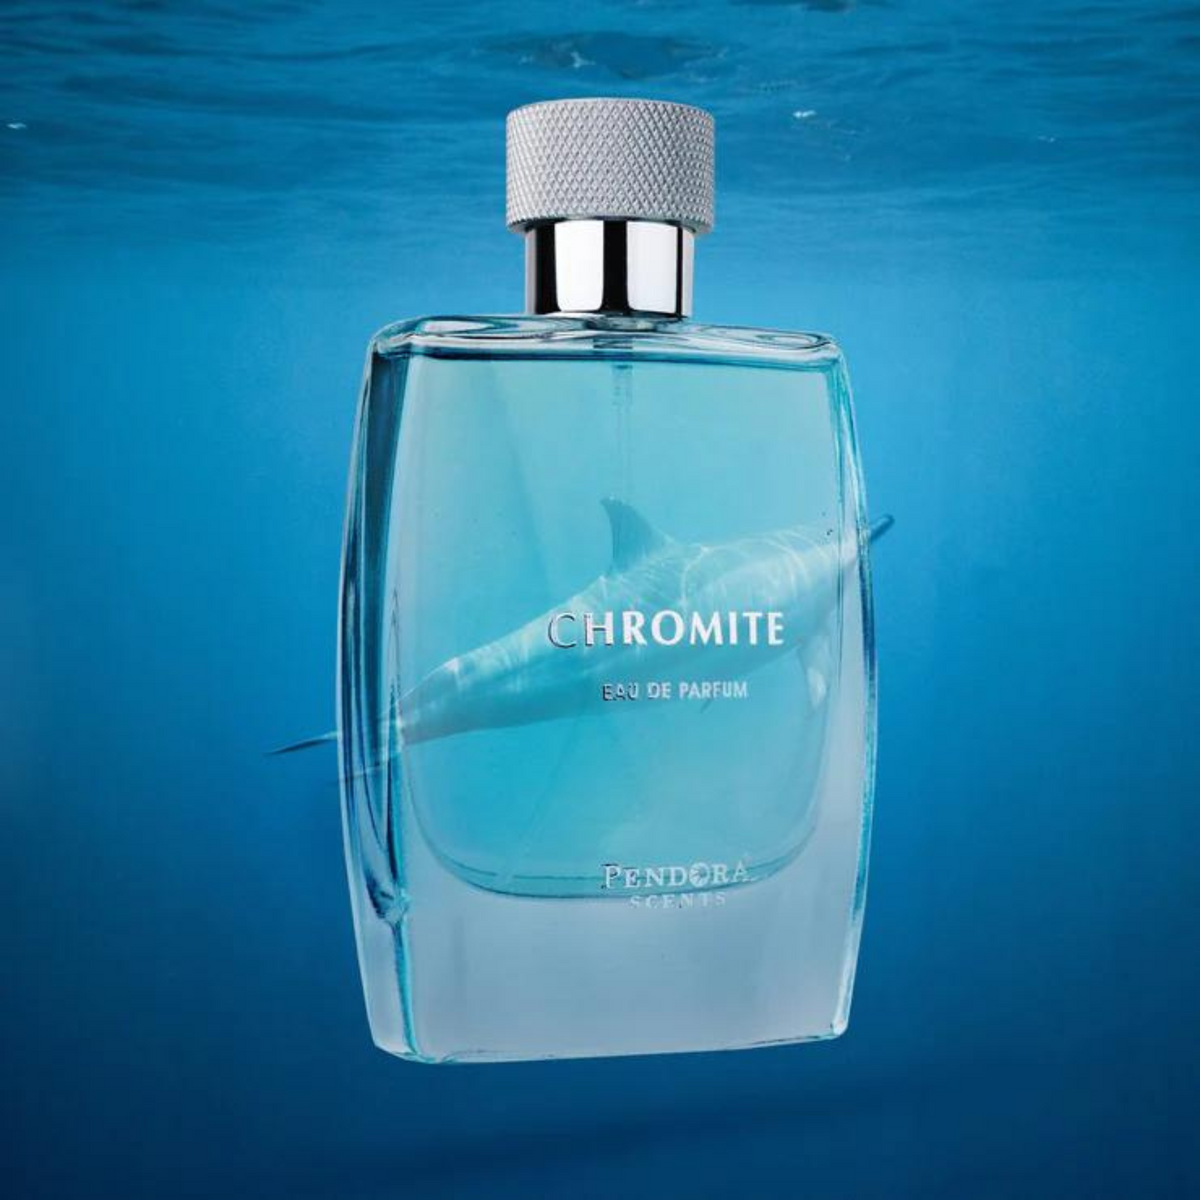 For Men's: Pendora Chromite, Saviour, Blue Wave , Bohemia, Aventura EDP - 100ml Each, Pack of 5 with Free Perfume Gift Set